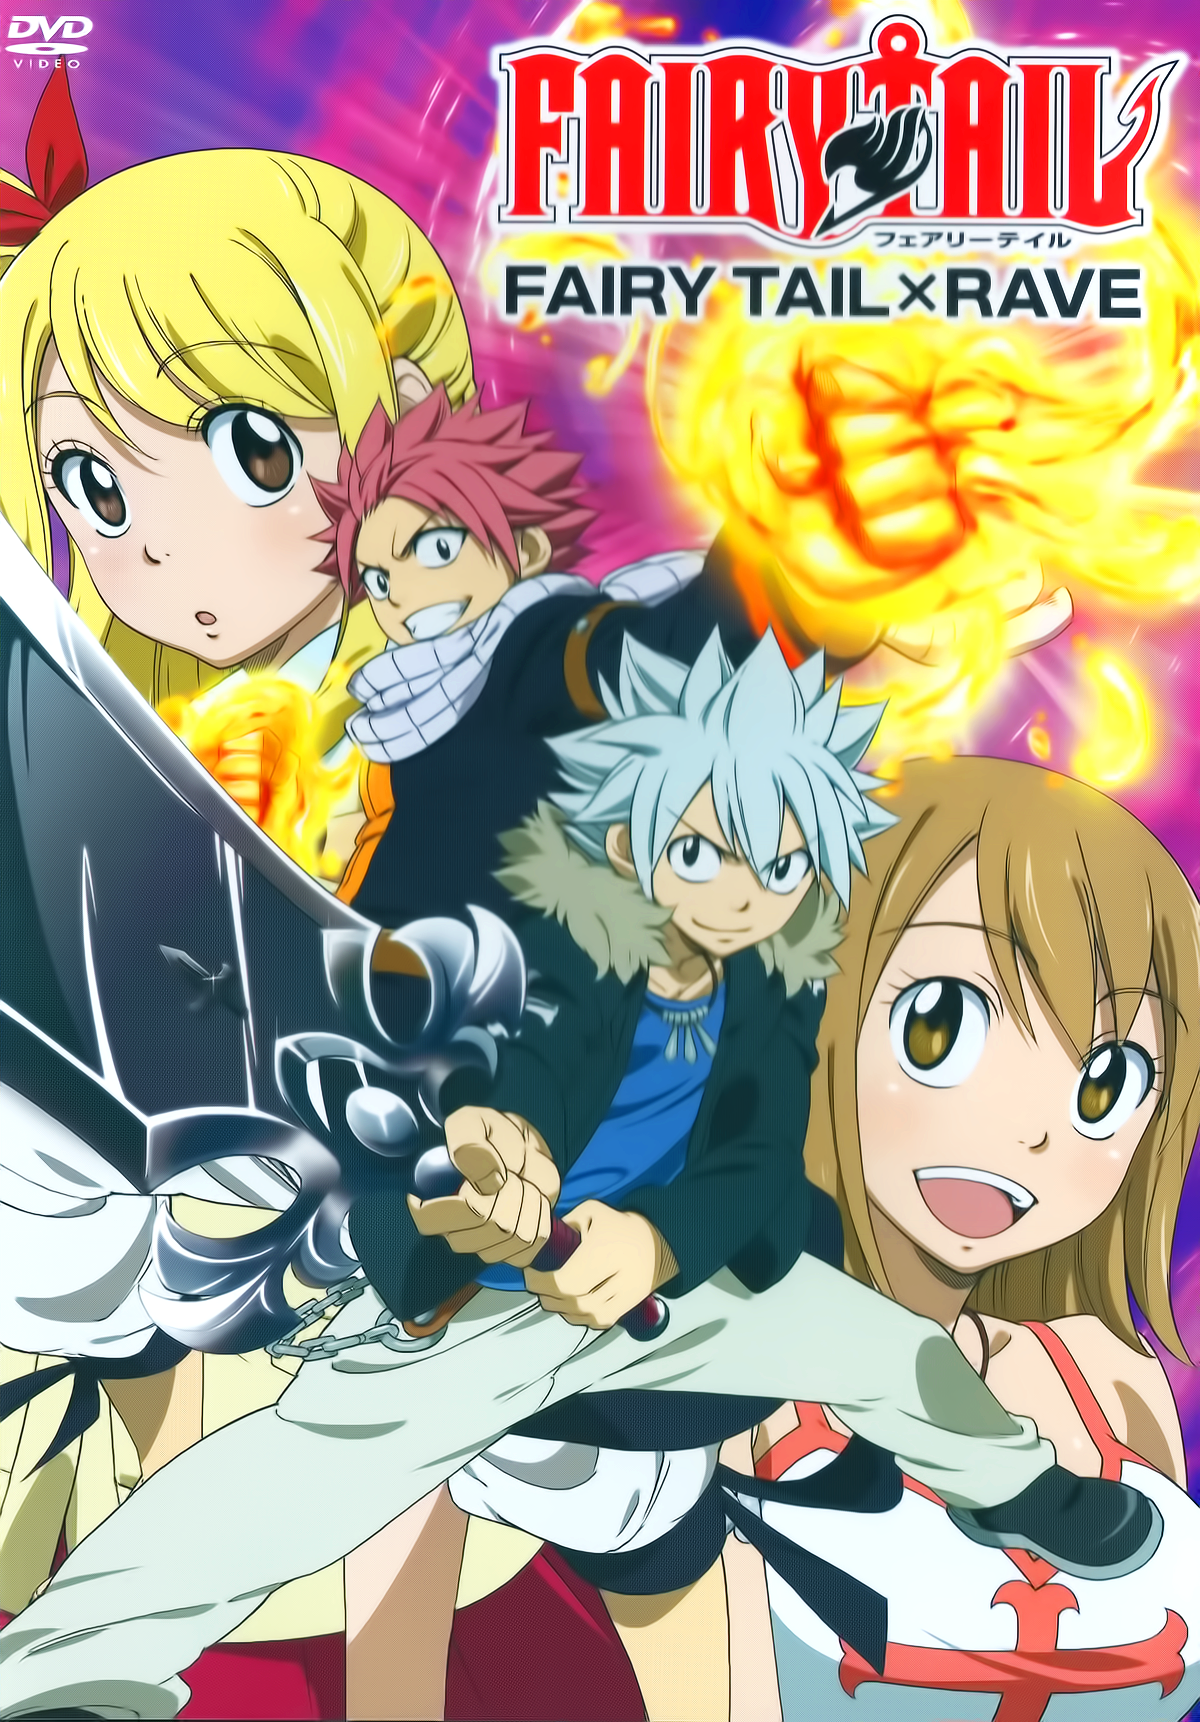 Fairy Tail X Rave Episode Fairy Tail Wiki Fandom